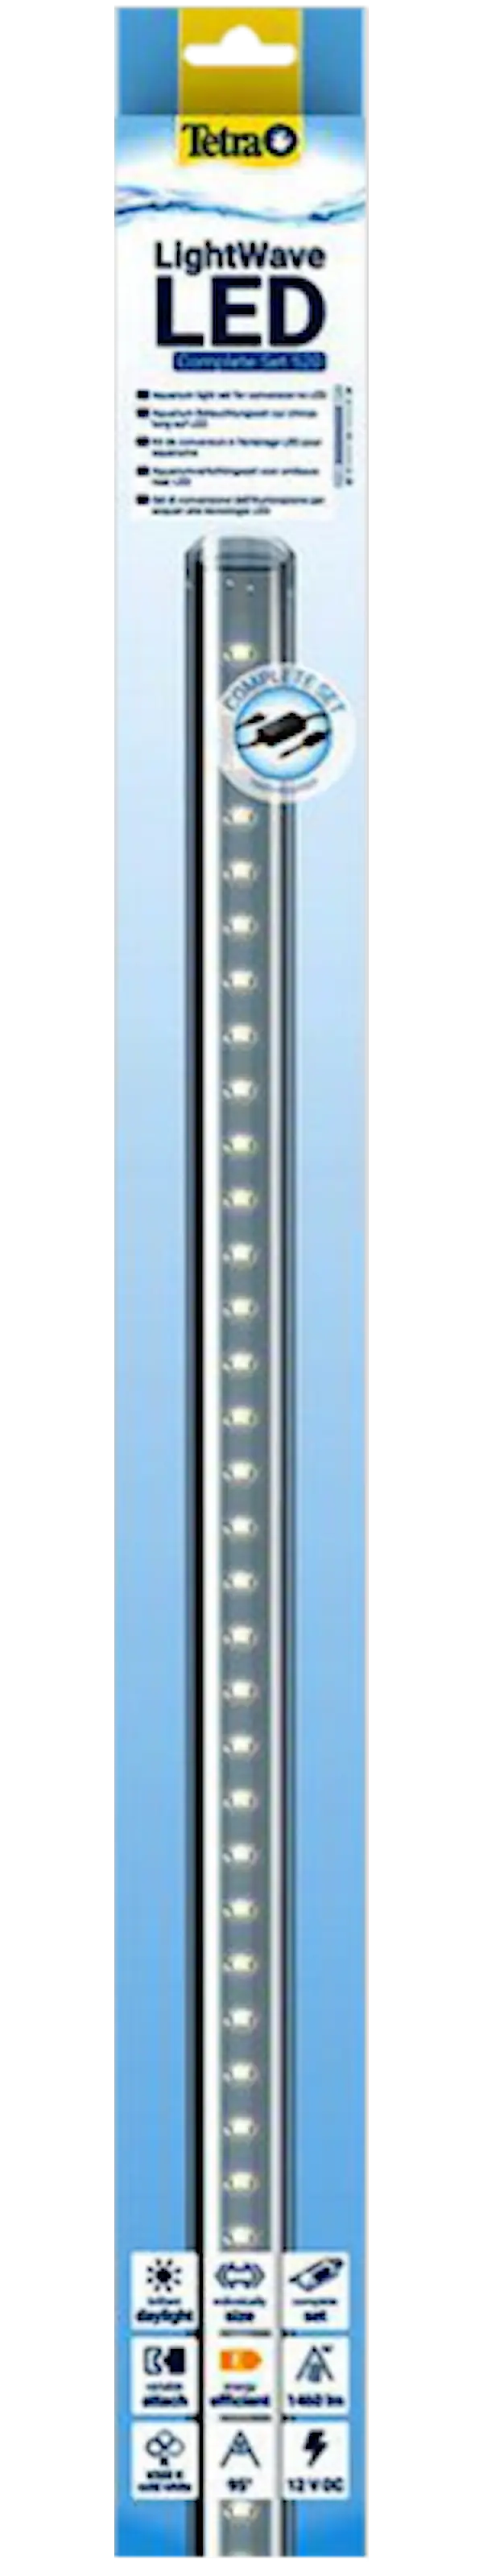 LightWave LED-enkeltlys, 1140 - 1220 mm